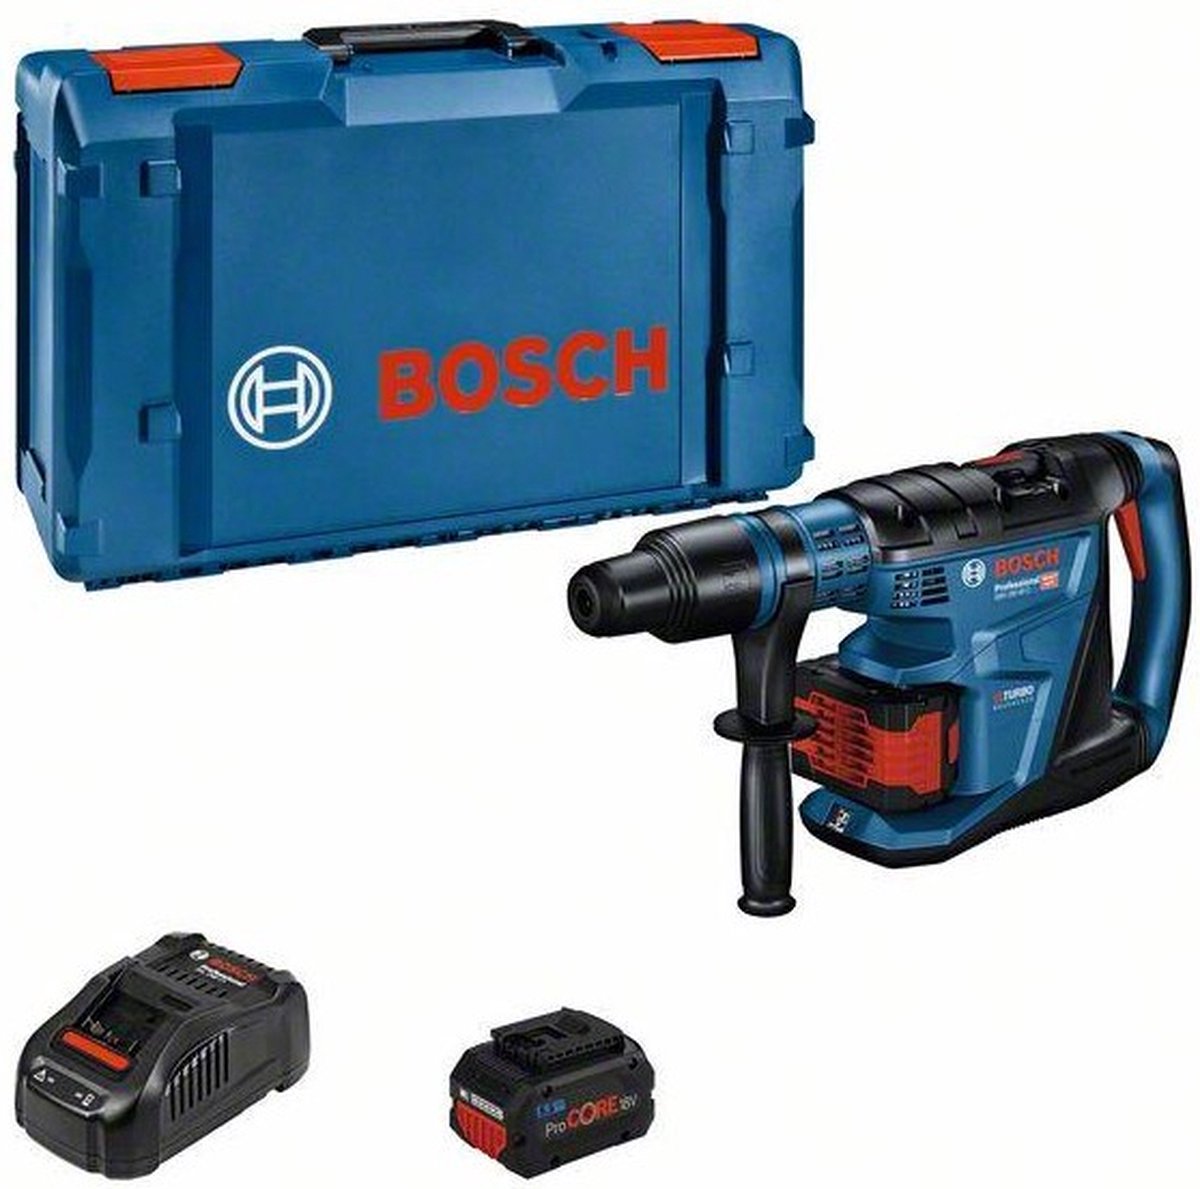 Bosch Professional GBH 18V-40 C Accu boorhamer BITURBO Met 2x 18V (5.5Ah) accu's en lader In XL-Boxx